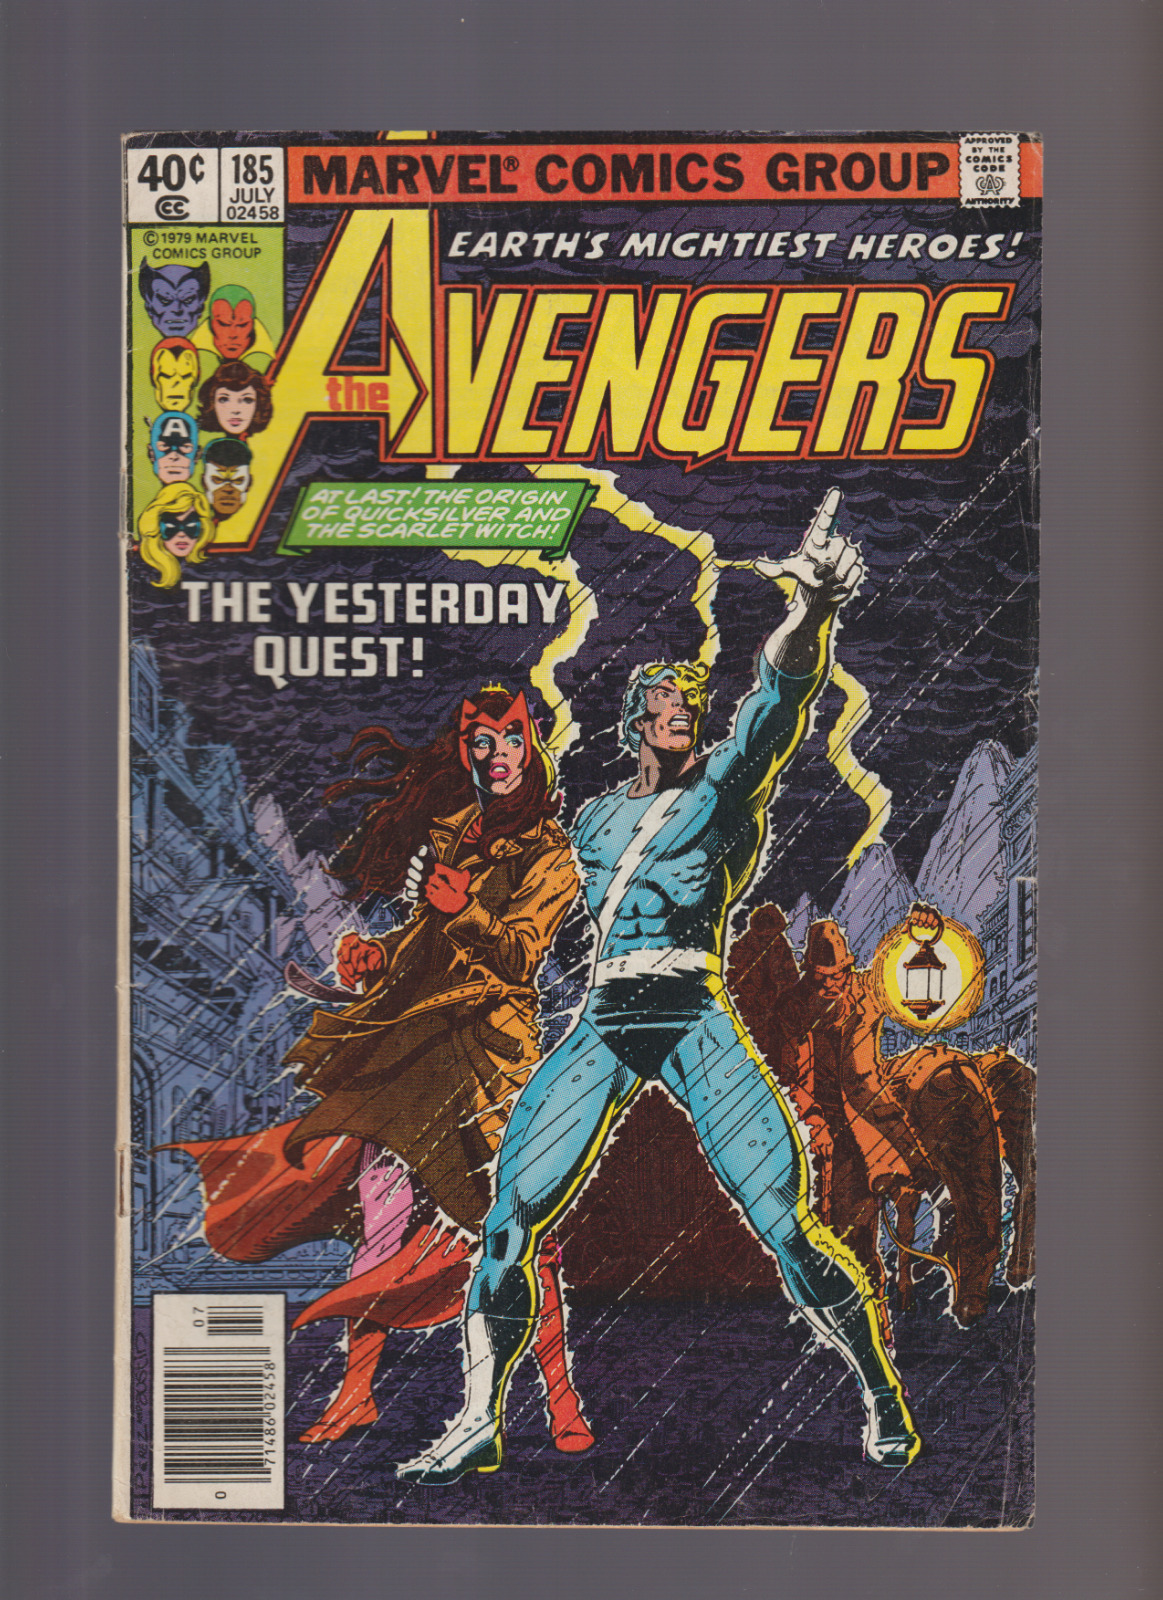 The Avengers #185 (1979) CLASSIC PEREZ COVER QUICKSILVER & SCARLET WITCH ORIGIN